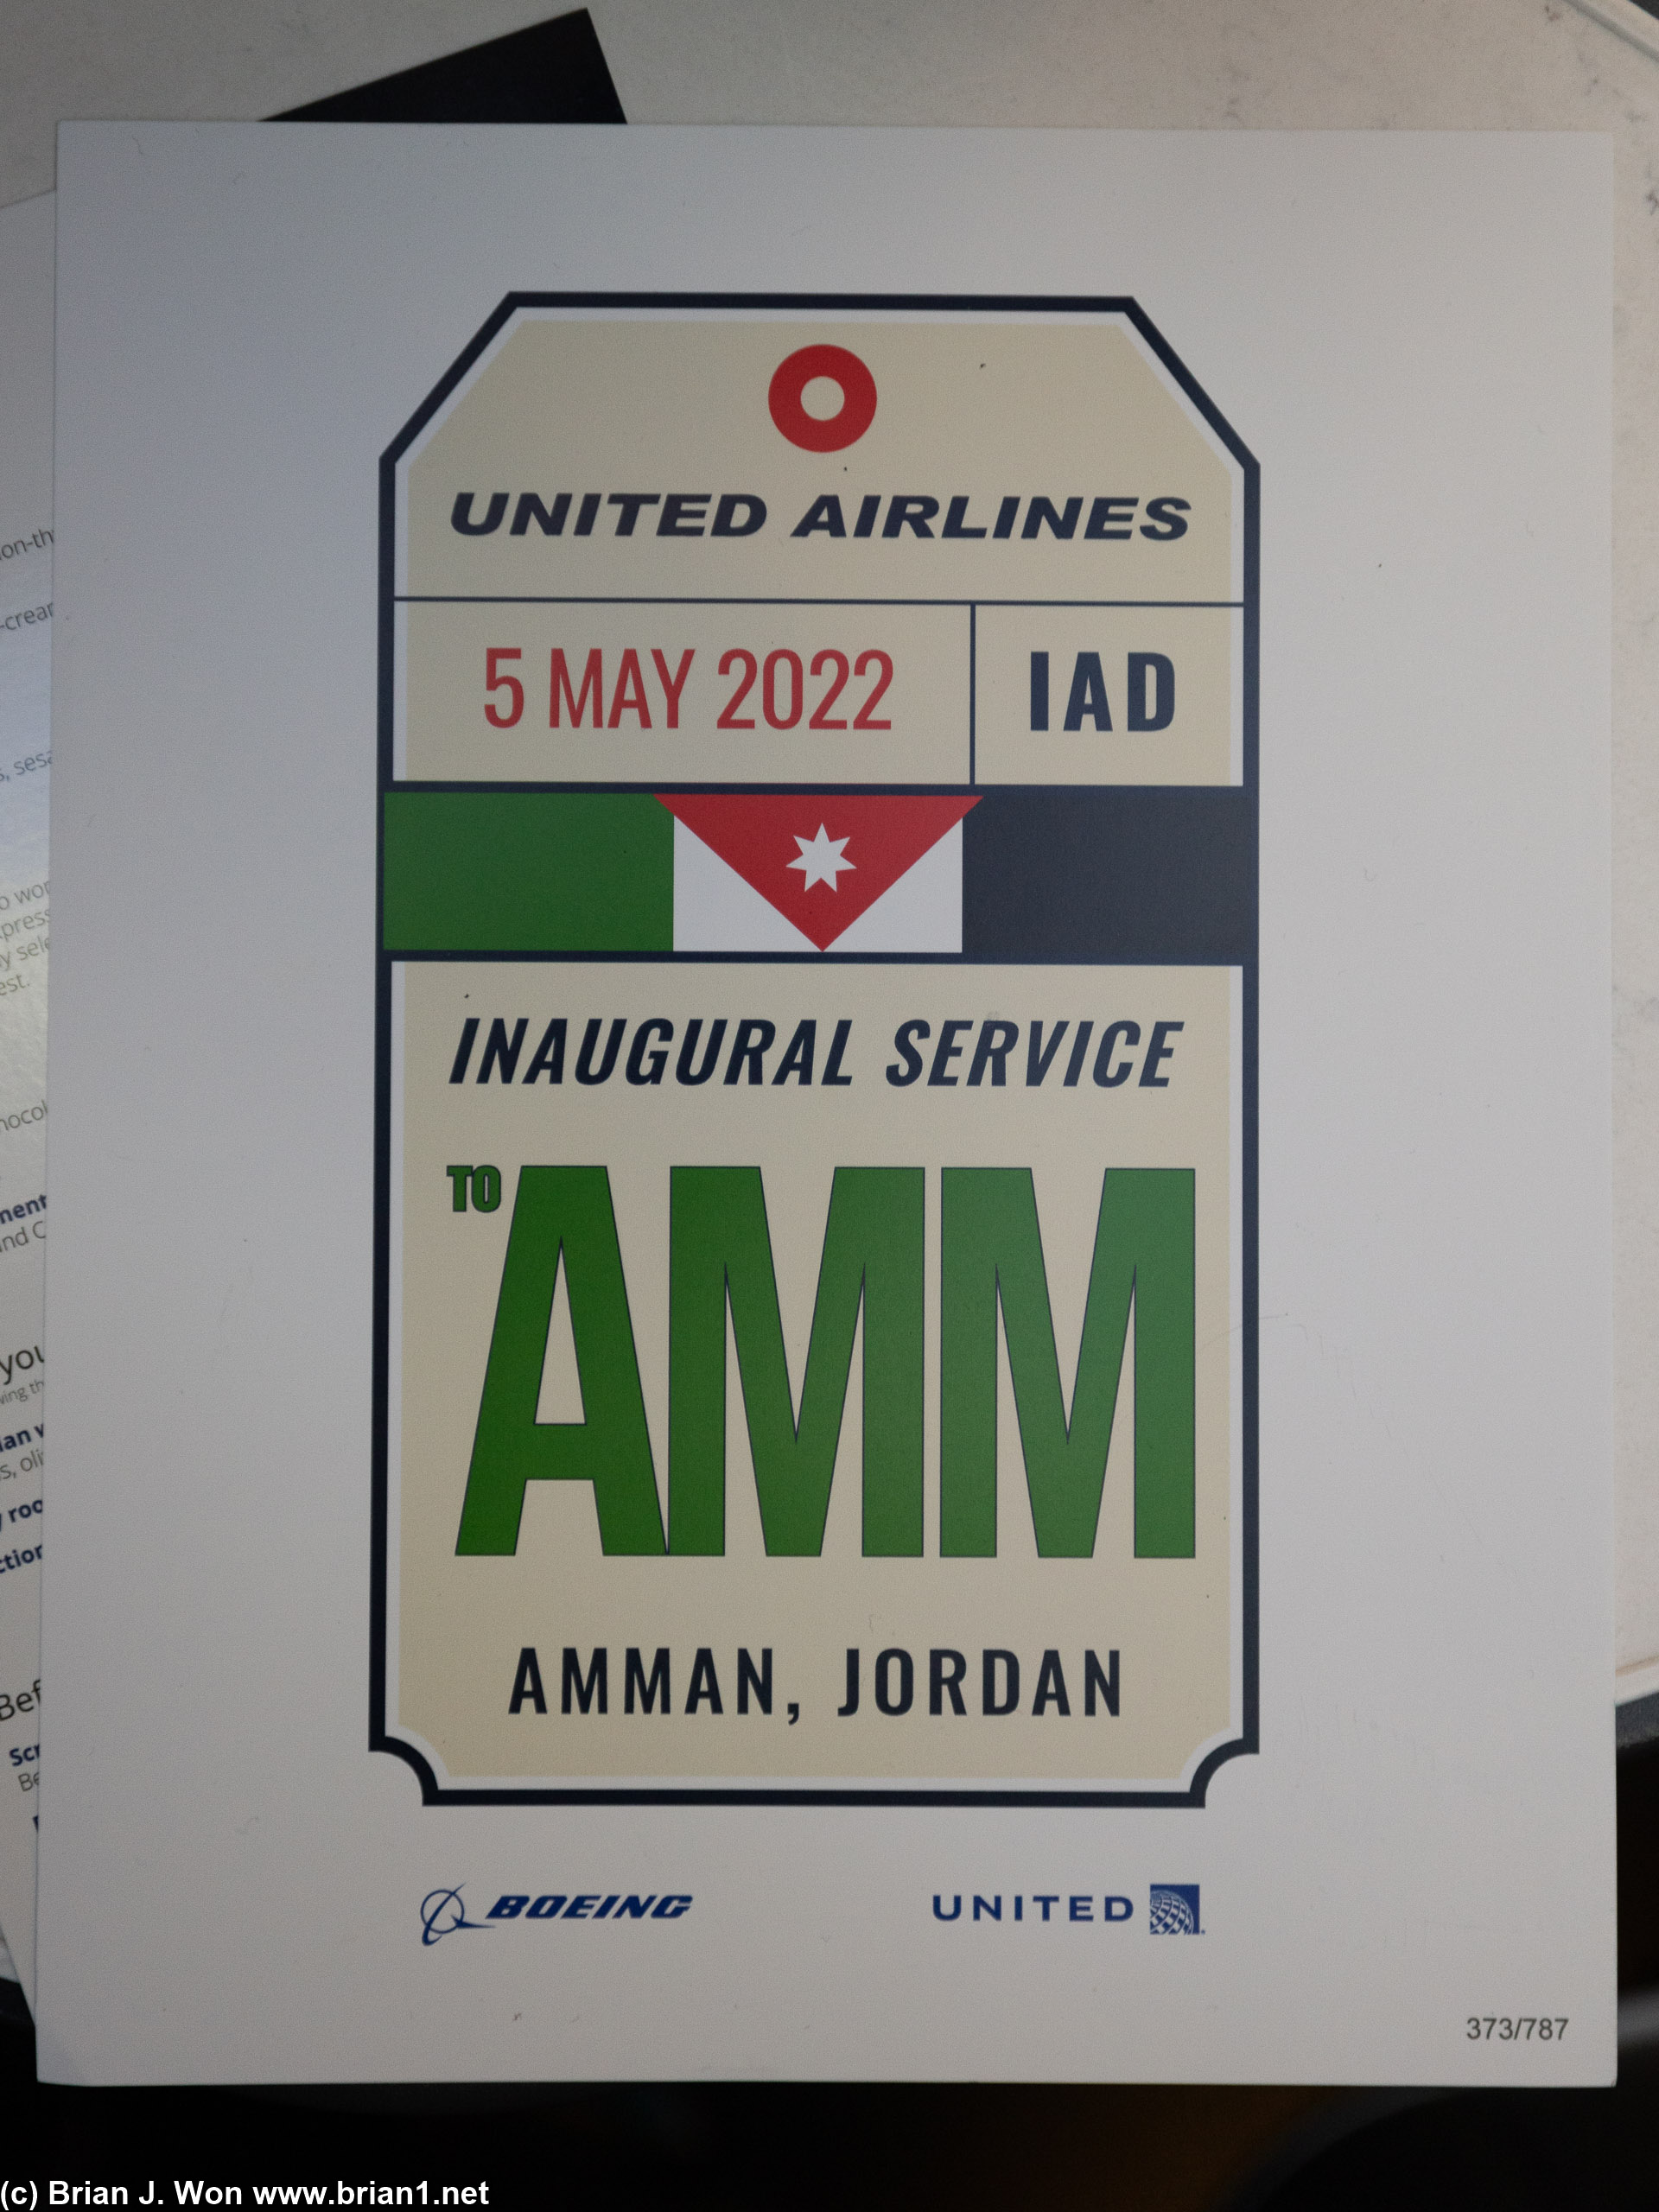 Inaugural service to Amman, Jordan.